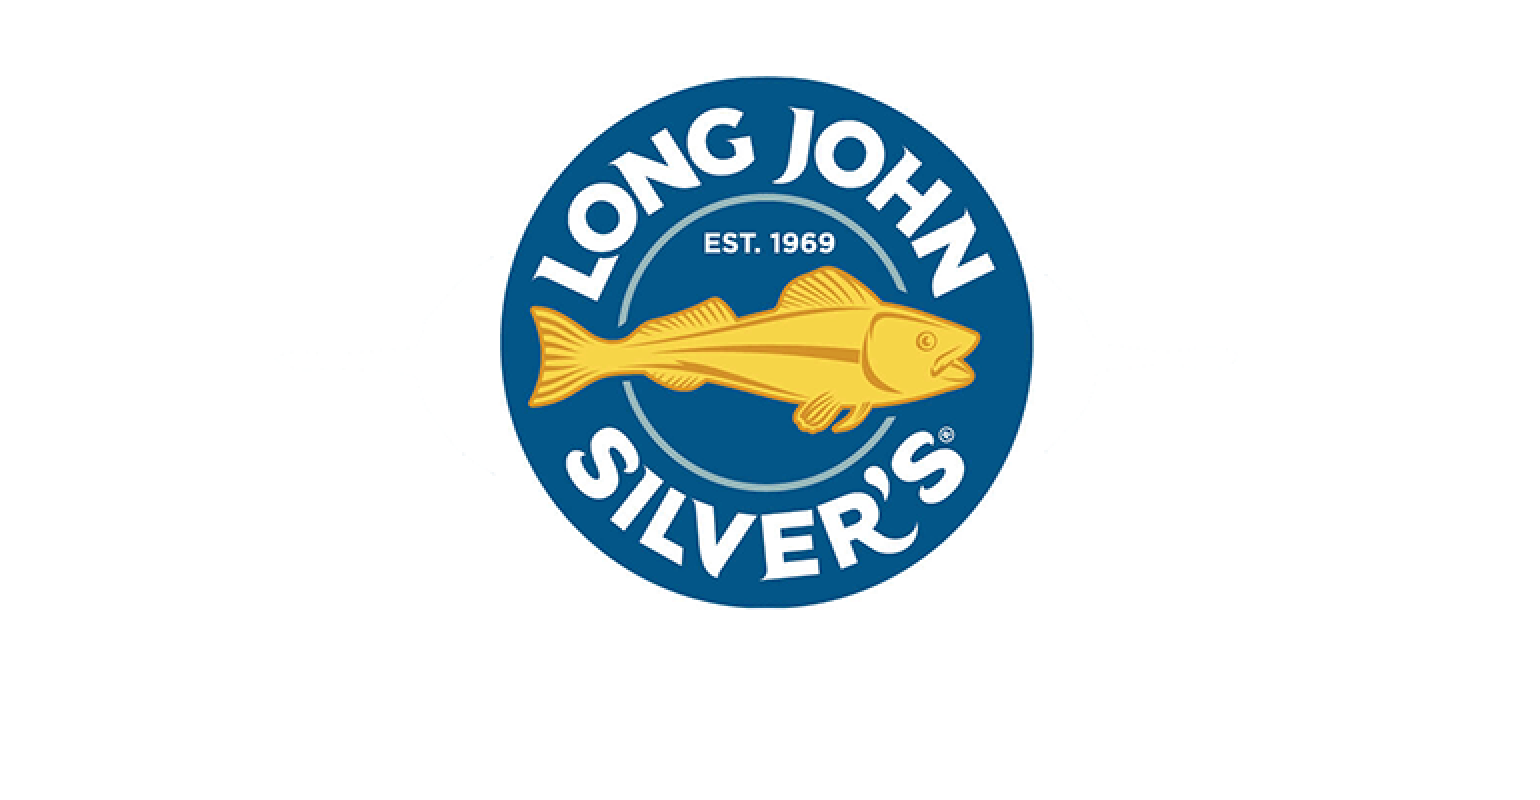 Long John Silver - Wikipedia